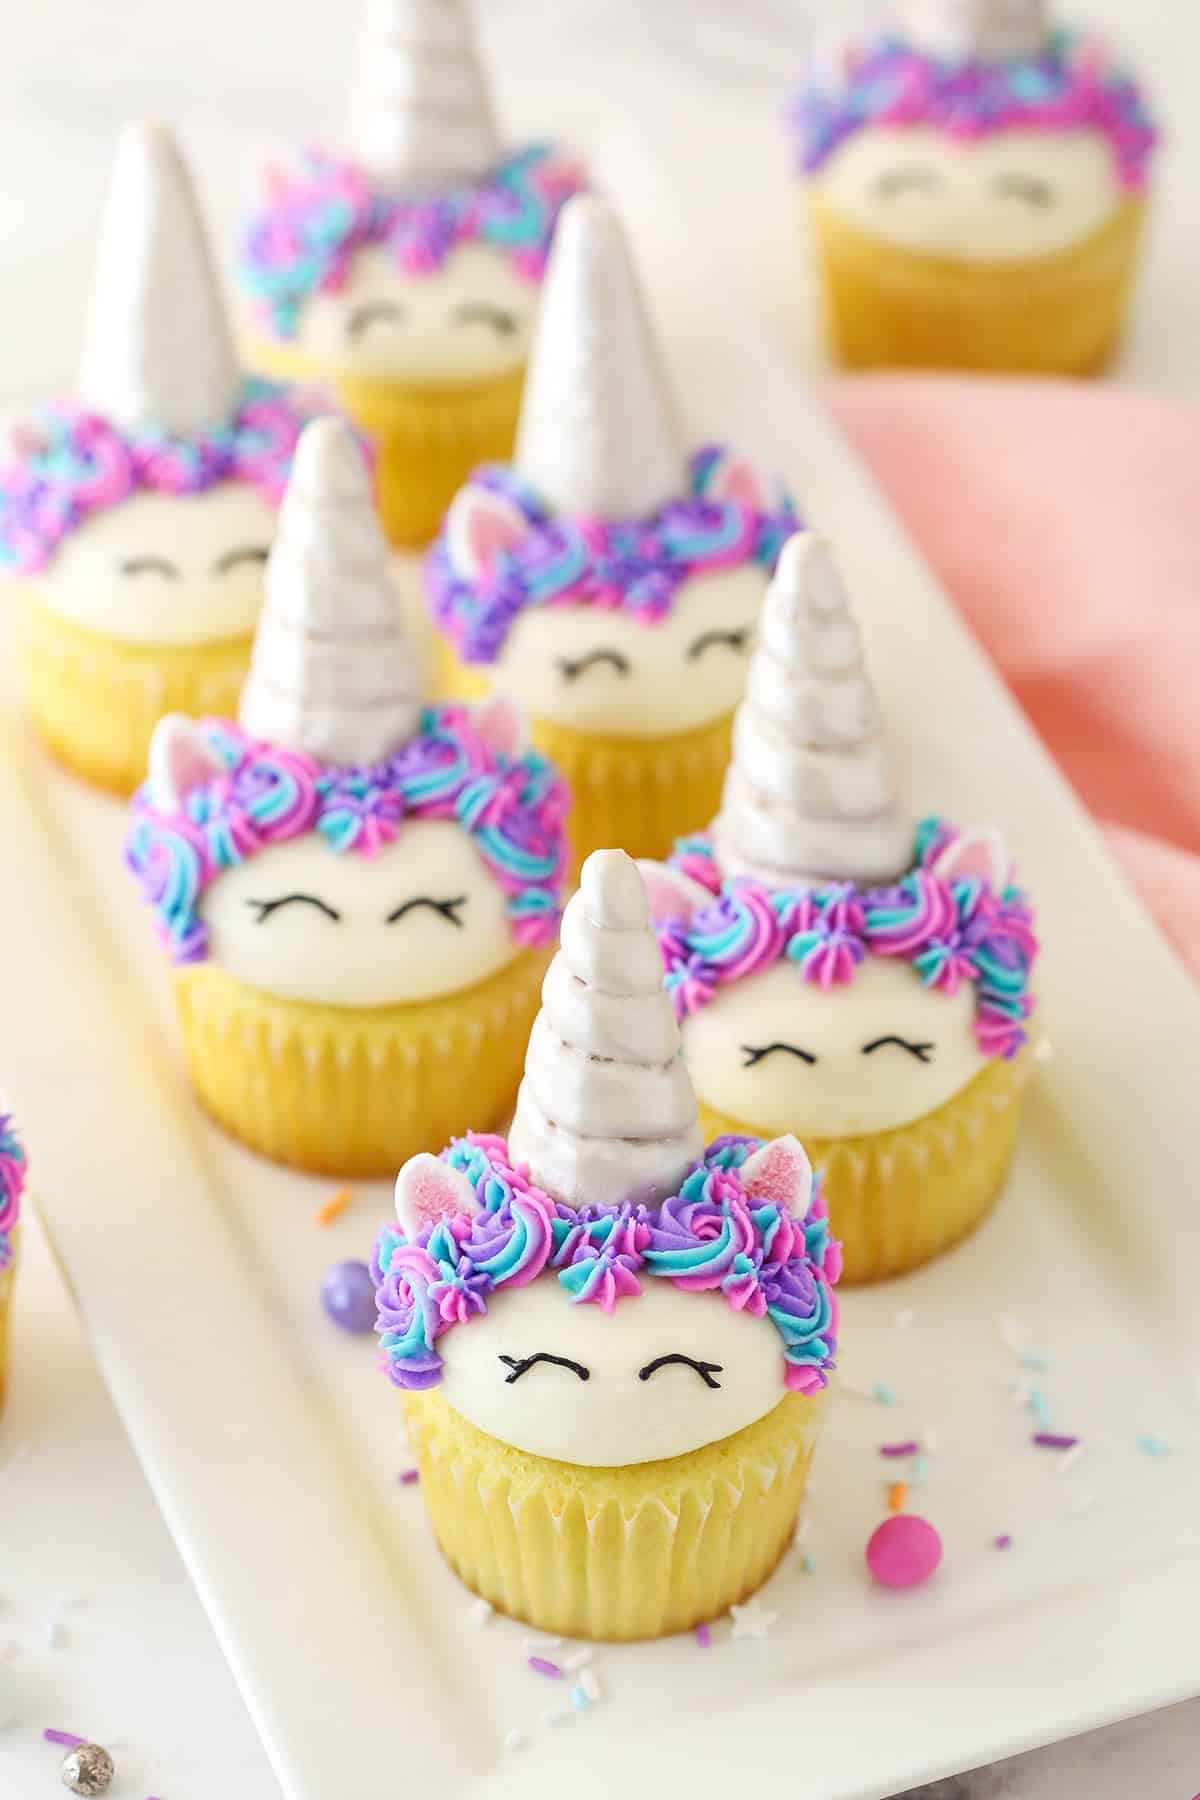 Decorated easy unicorn cupcakes.